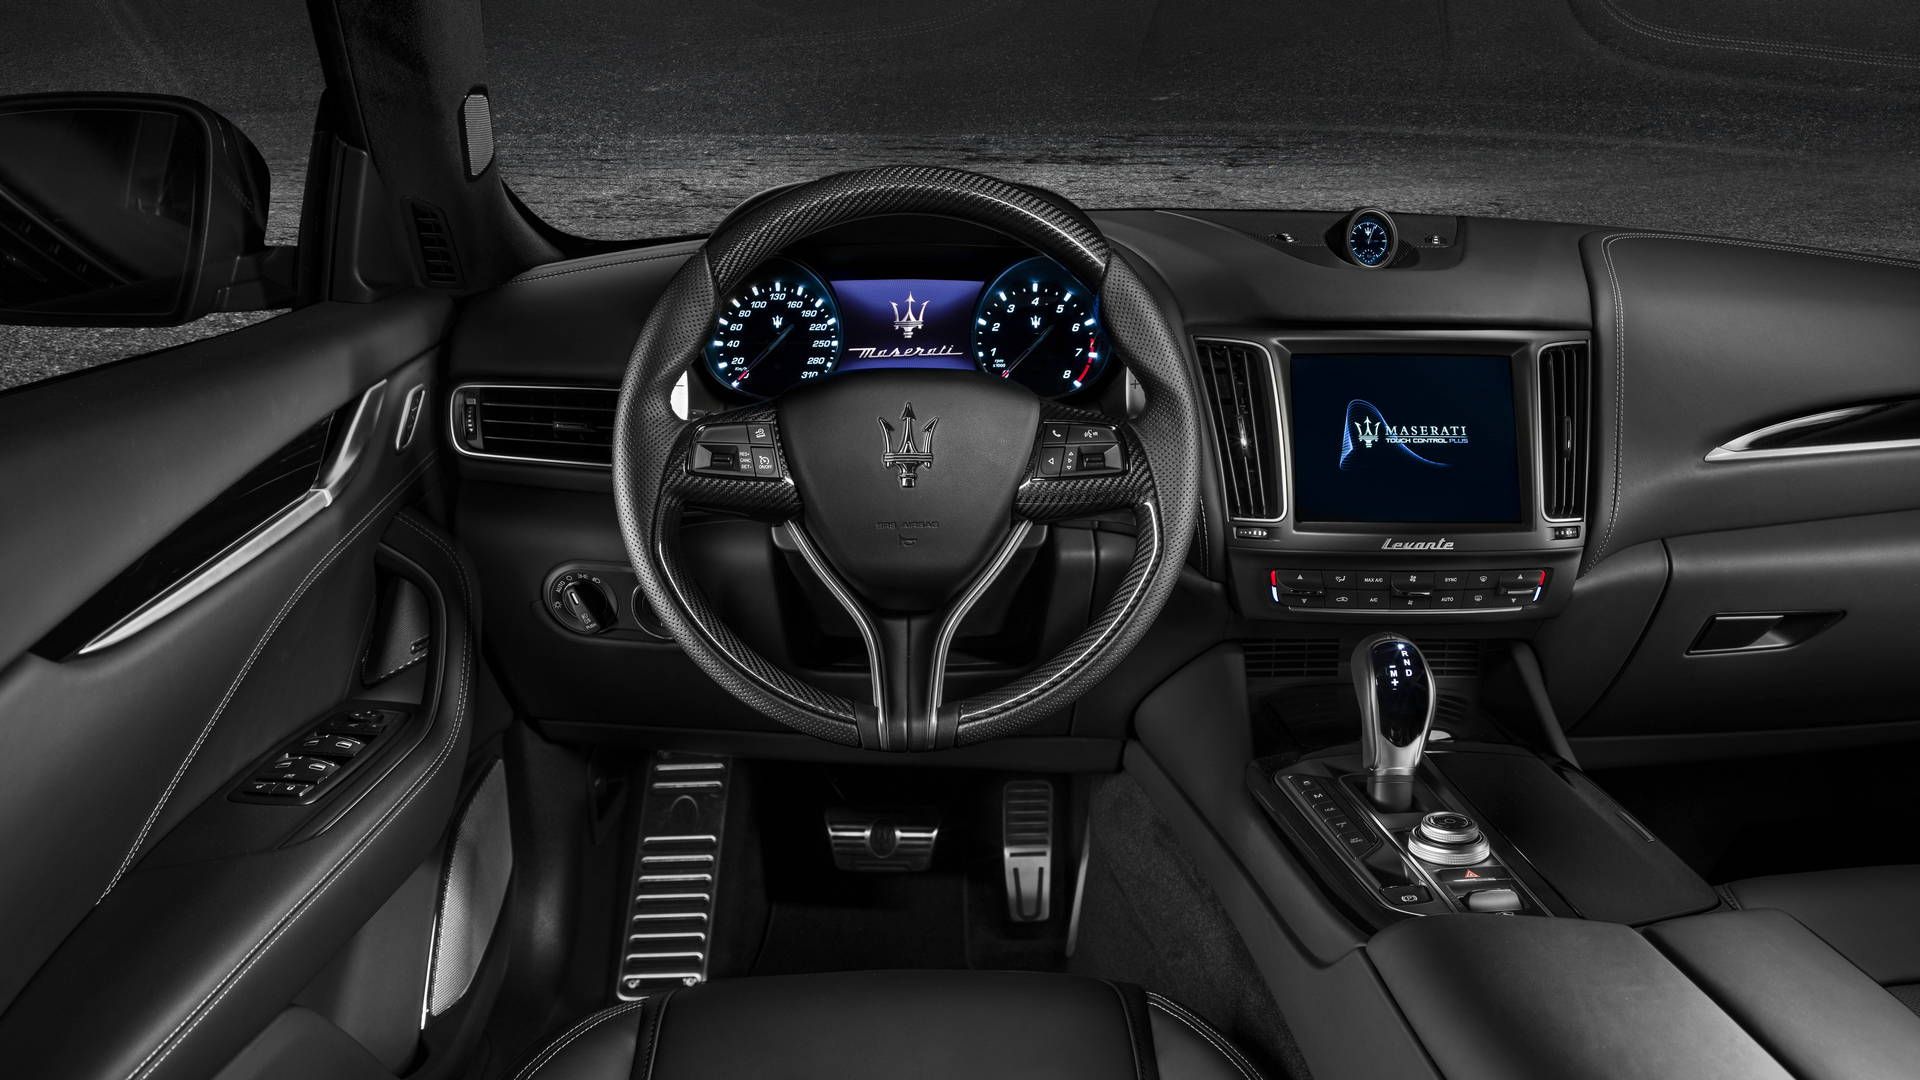 Maserati Suv Interior 2018 Image New Collection